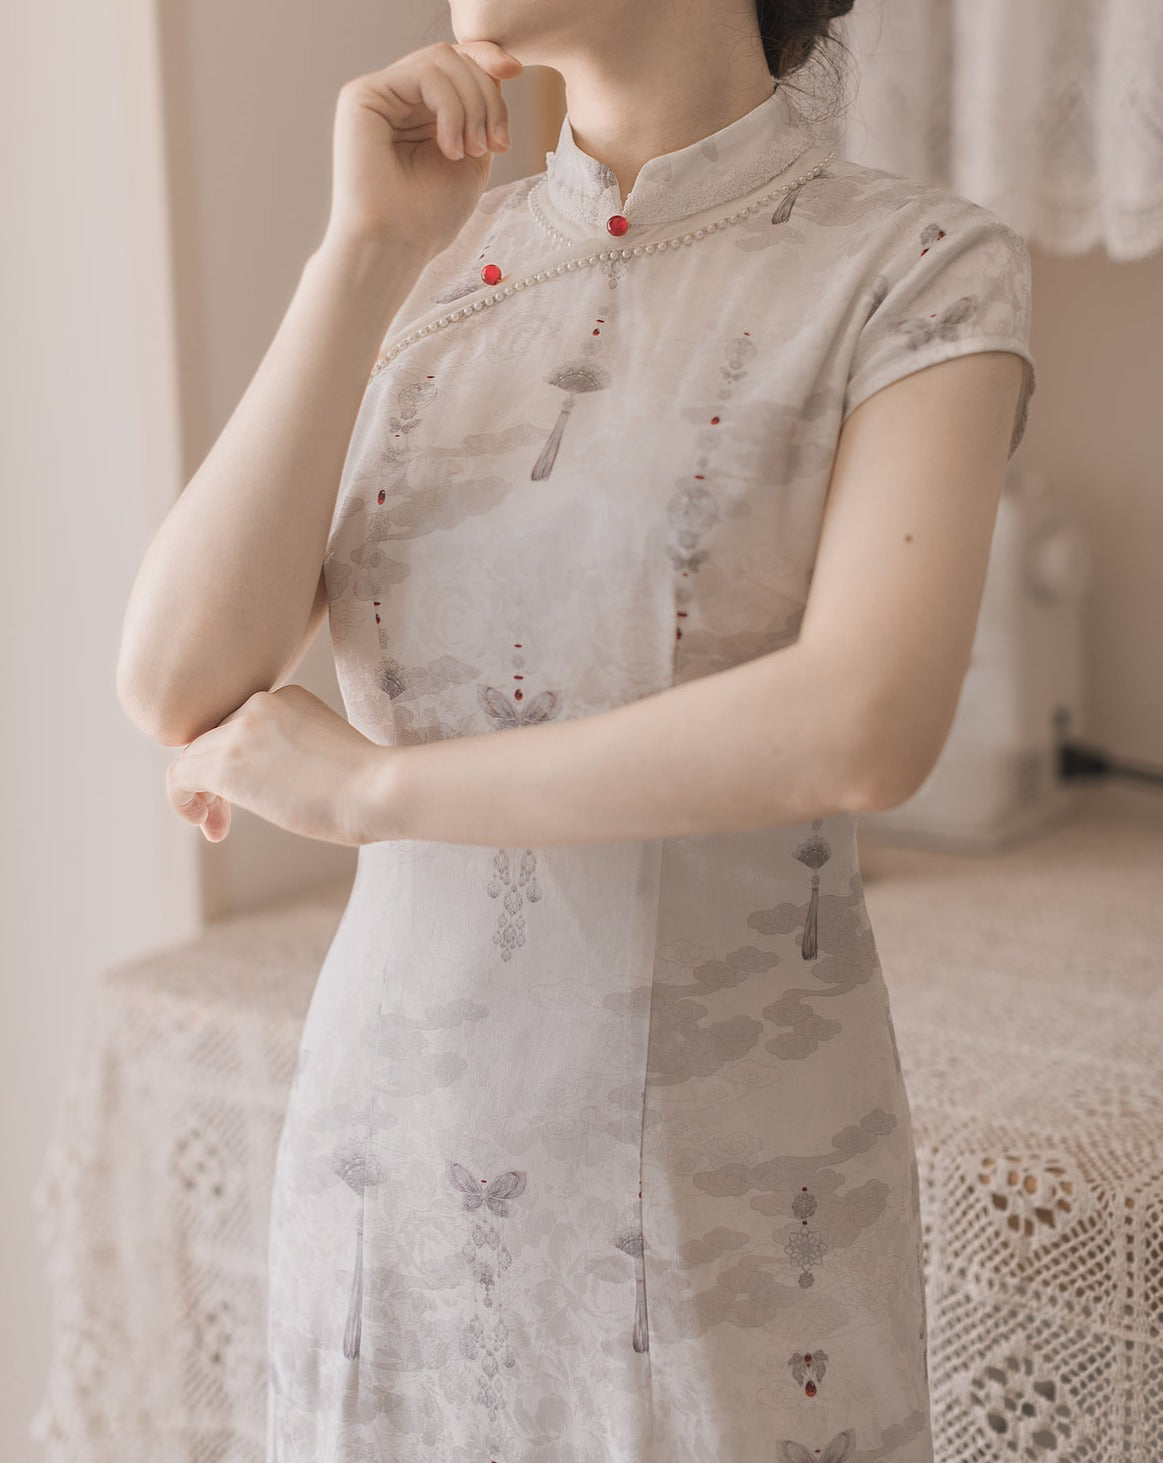 Butterfly Fan Painting Hana Lori Elegant China Dress Slim Fit ver